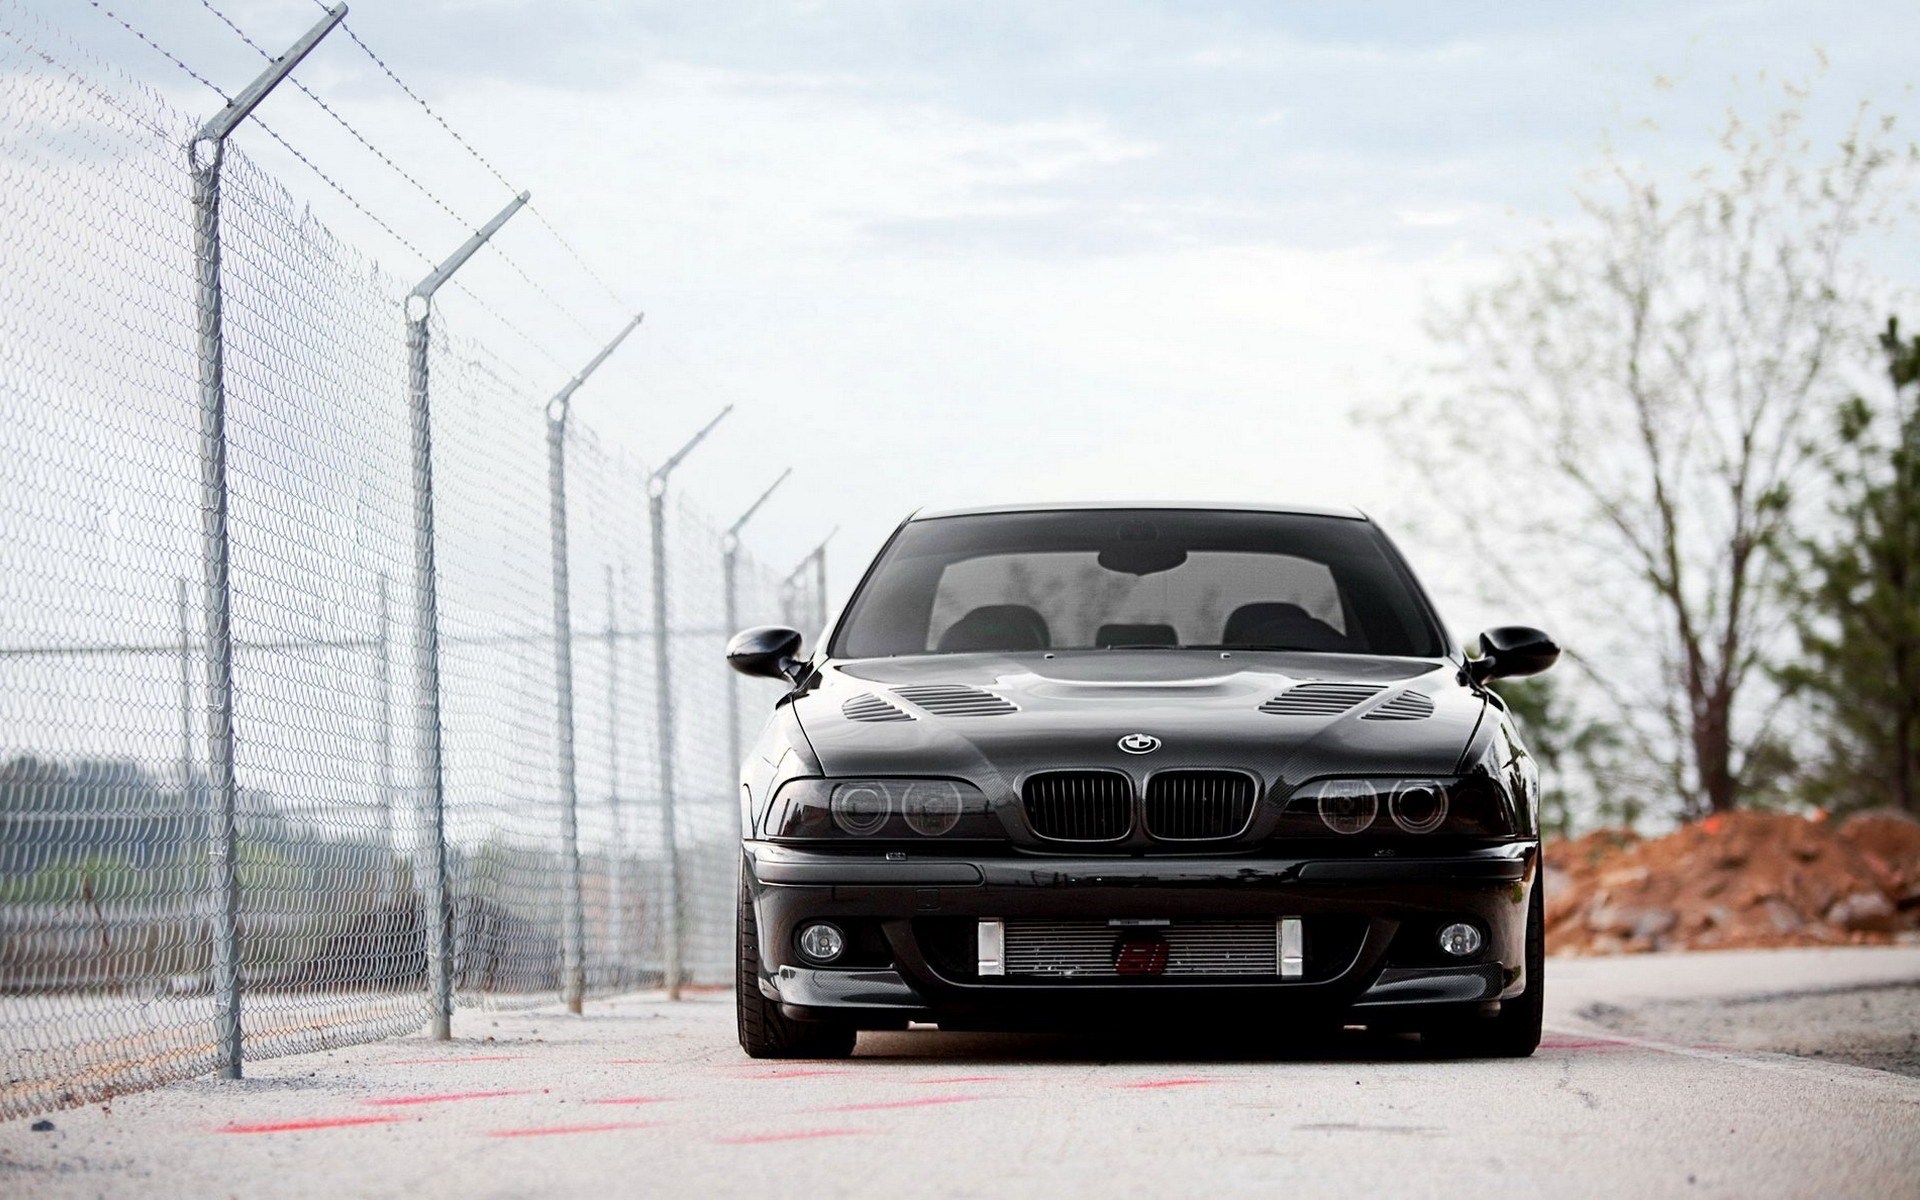 BMW M5 Supercharged E39 Car Fence Parking